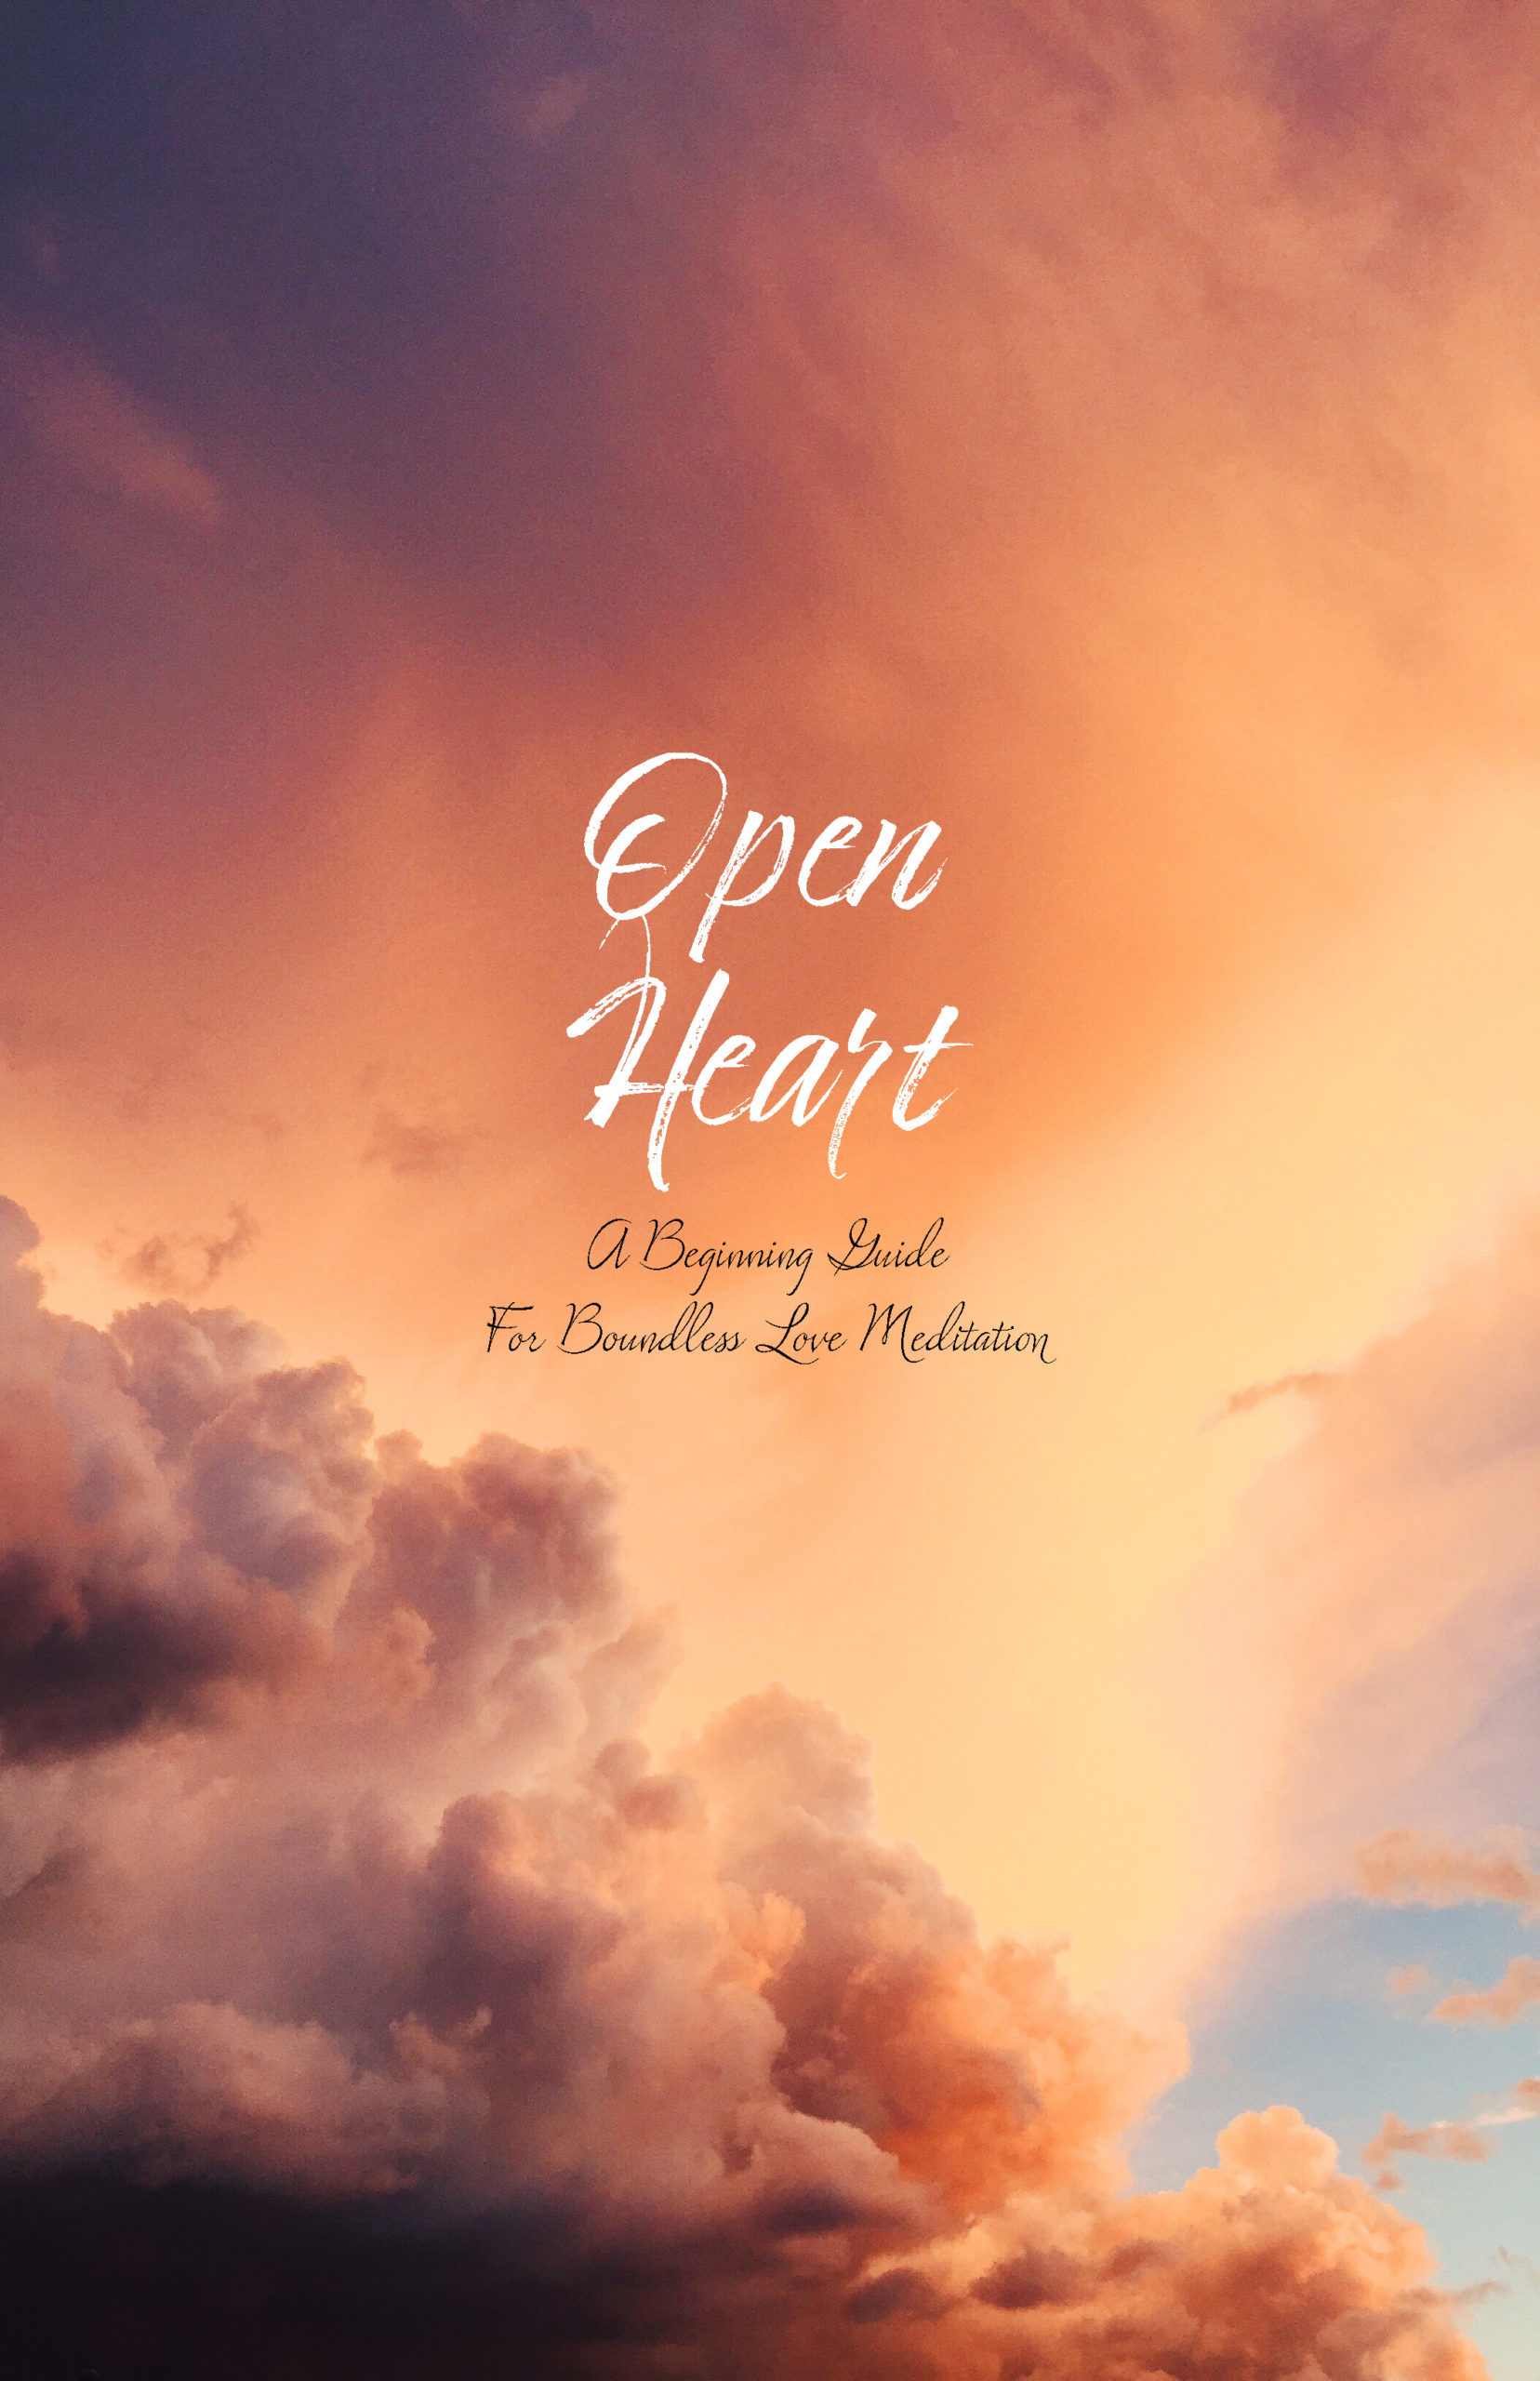 Open Heart Book - A Beginning Guide to Boundless Love Meditation by Bhante Ānanda